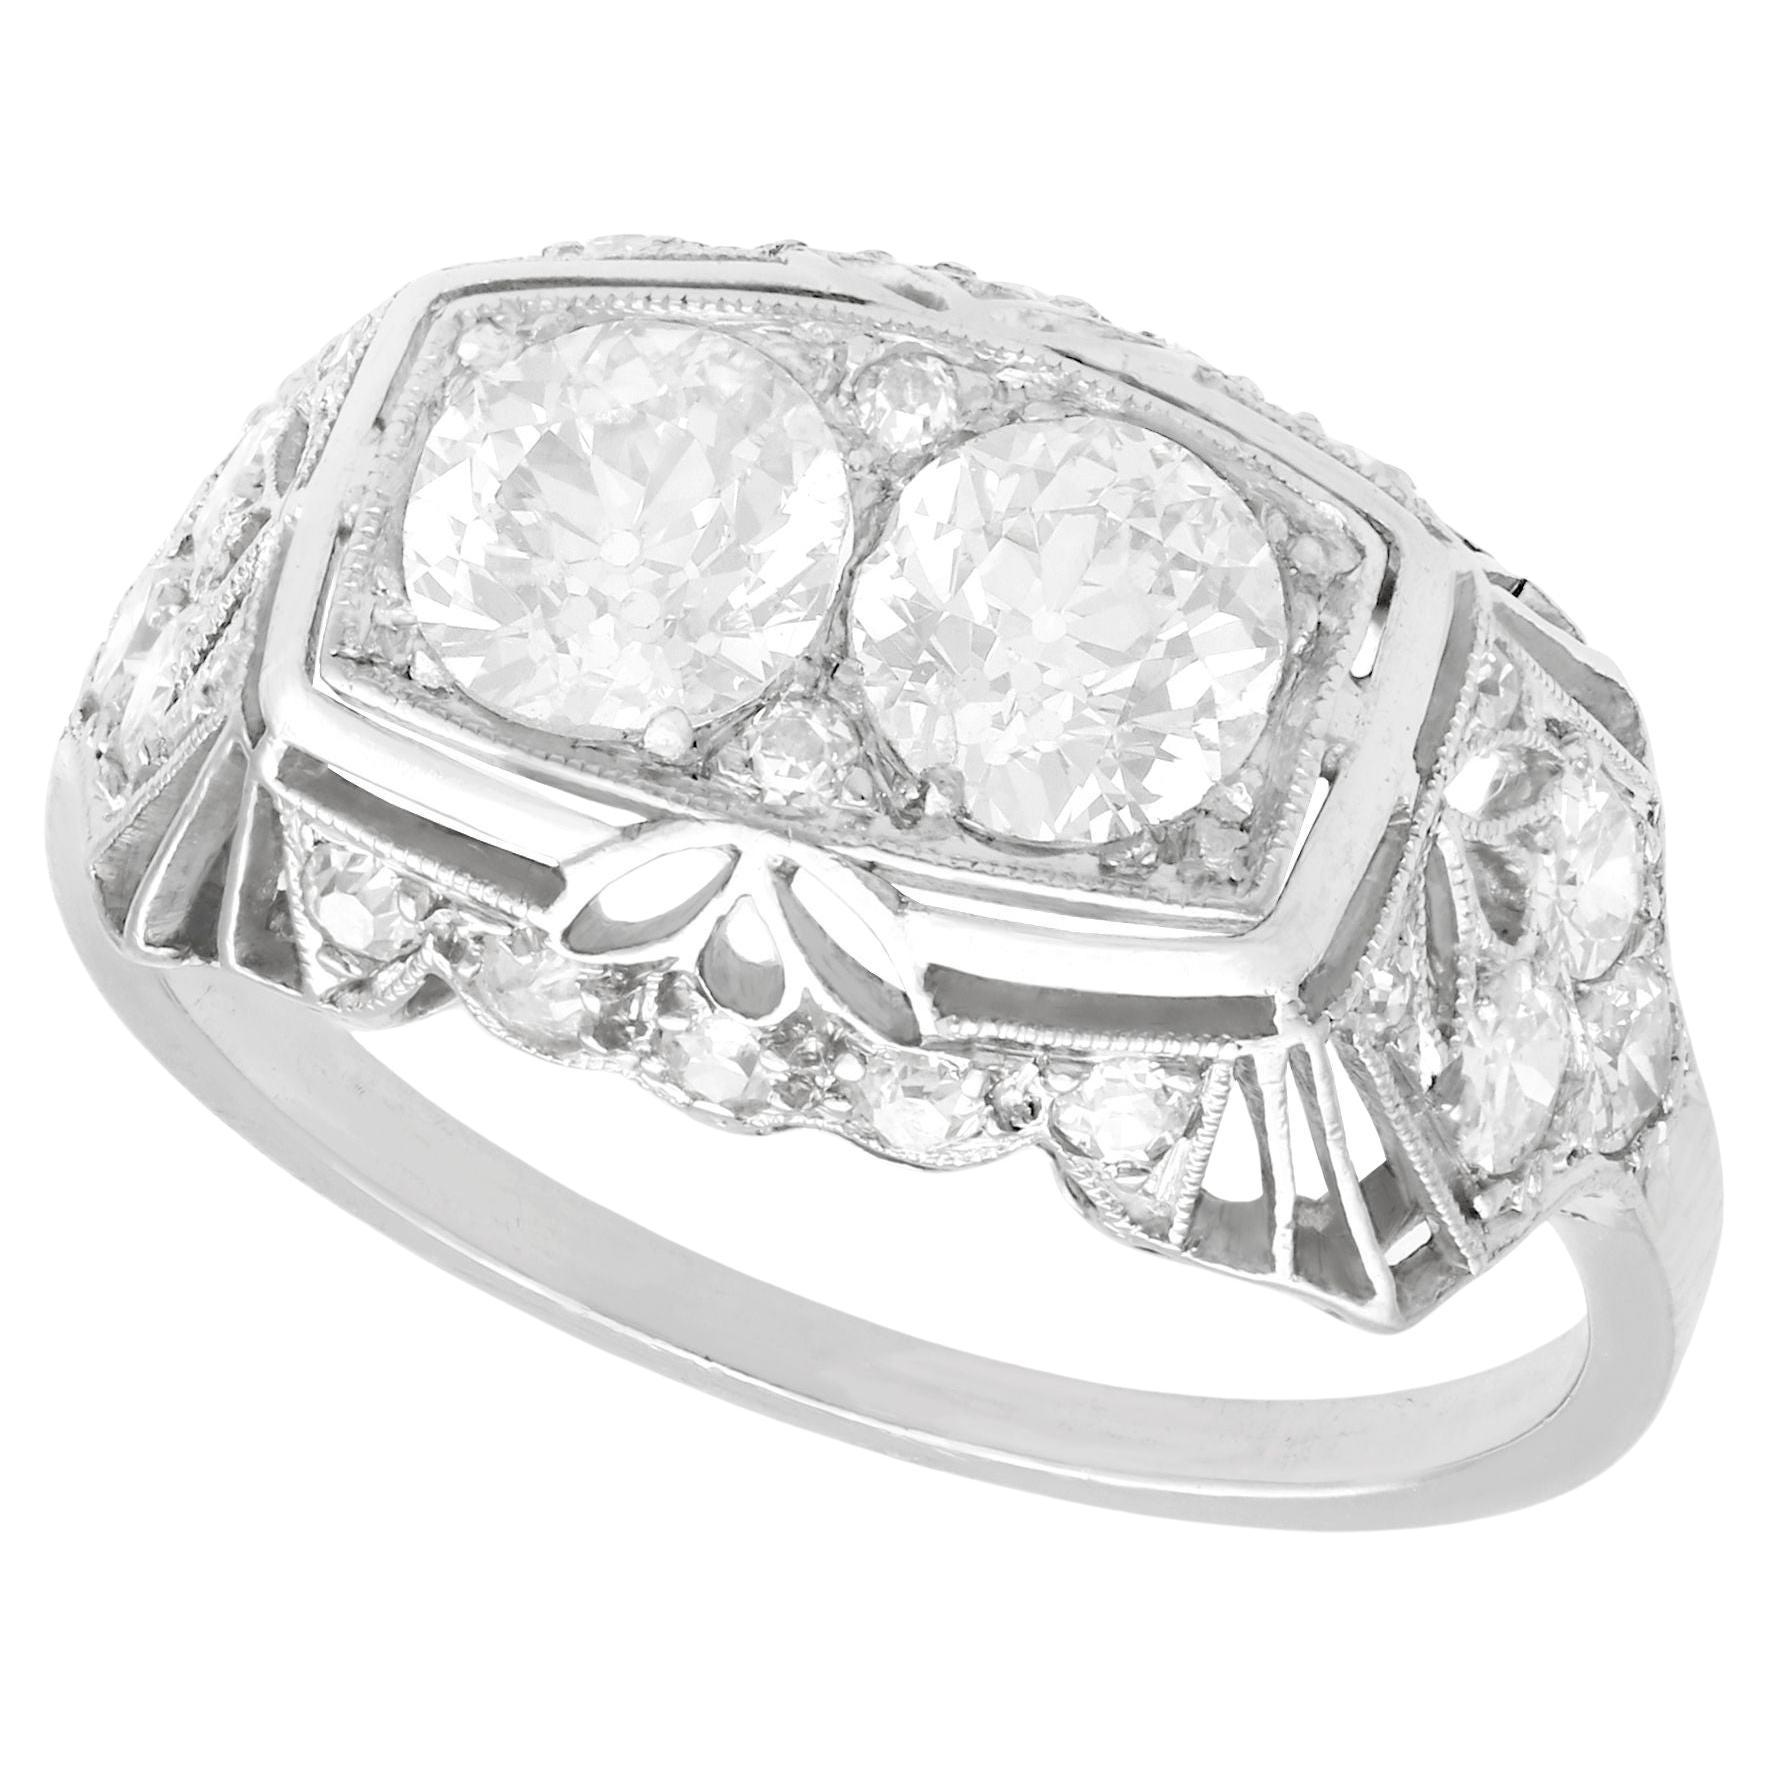 1940s 1.73 Carat Diamond and Platinum Cocktail Ring